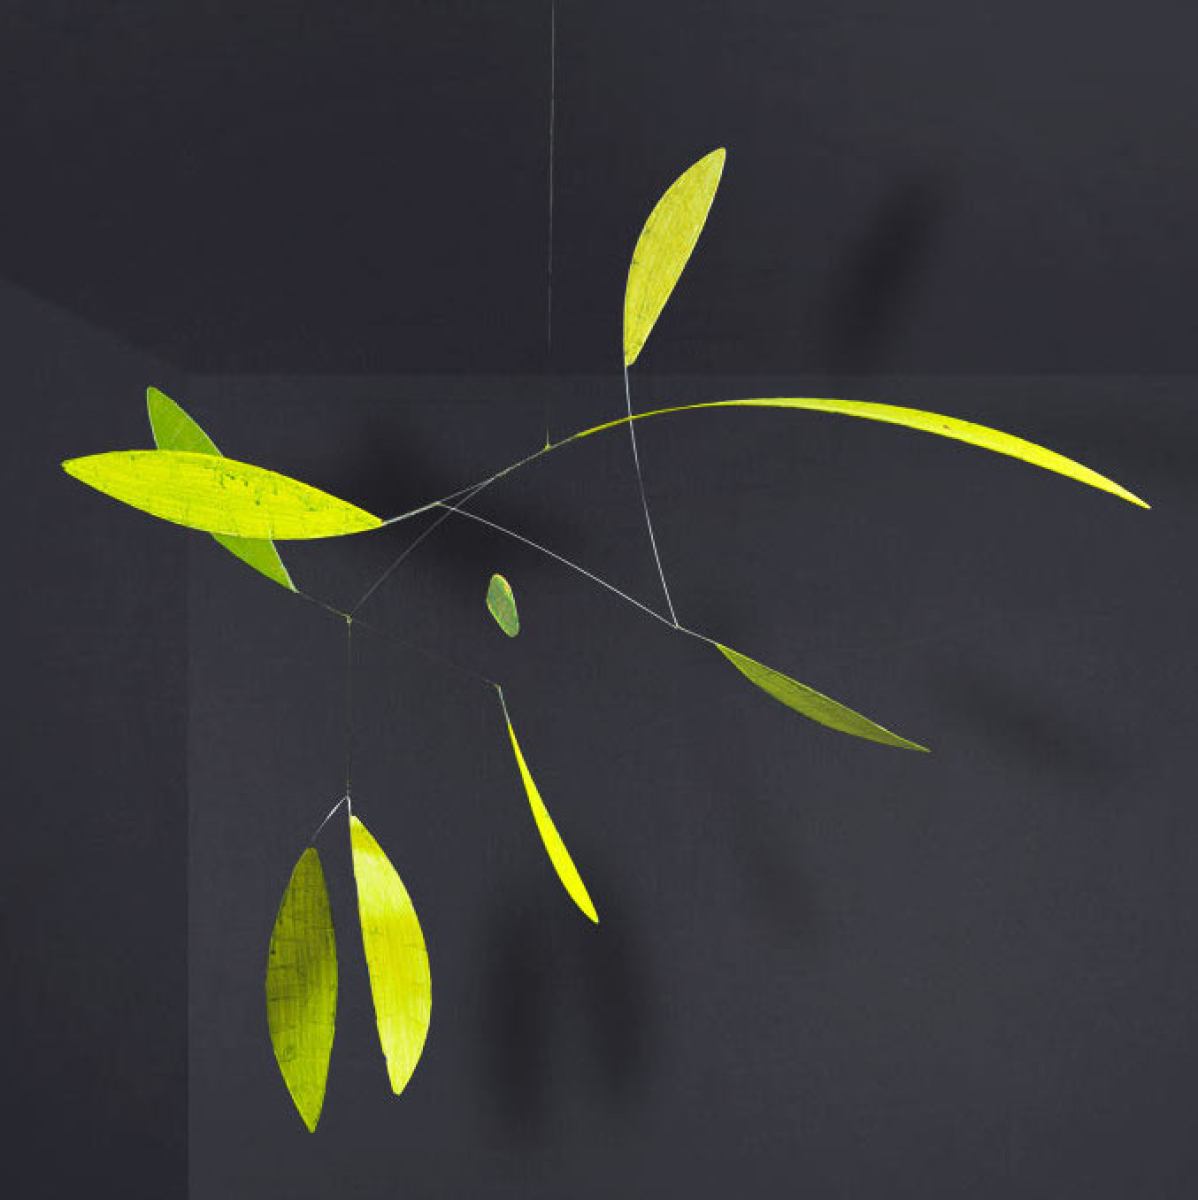 Large Art Mobile "Green Leaf" with Leaf-Shaped Elements (80 x 60 cm)